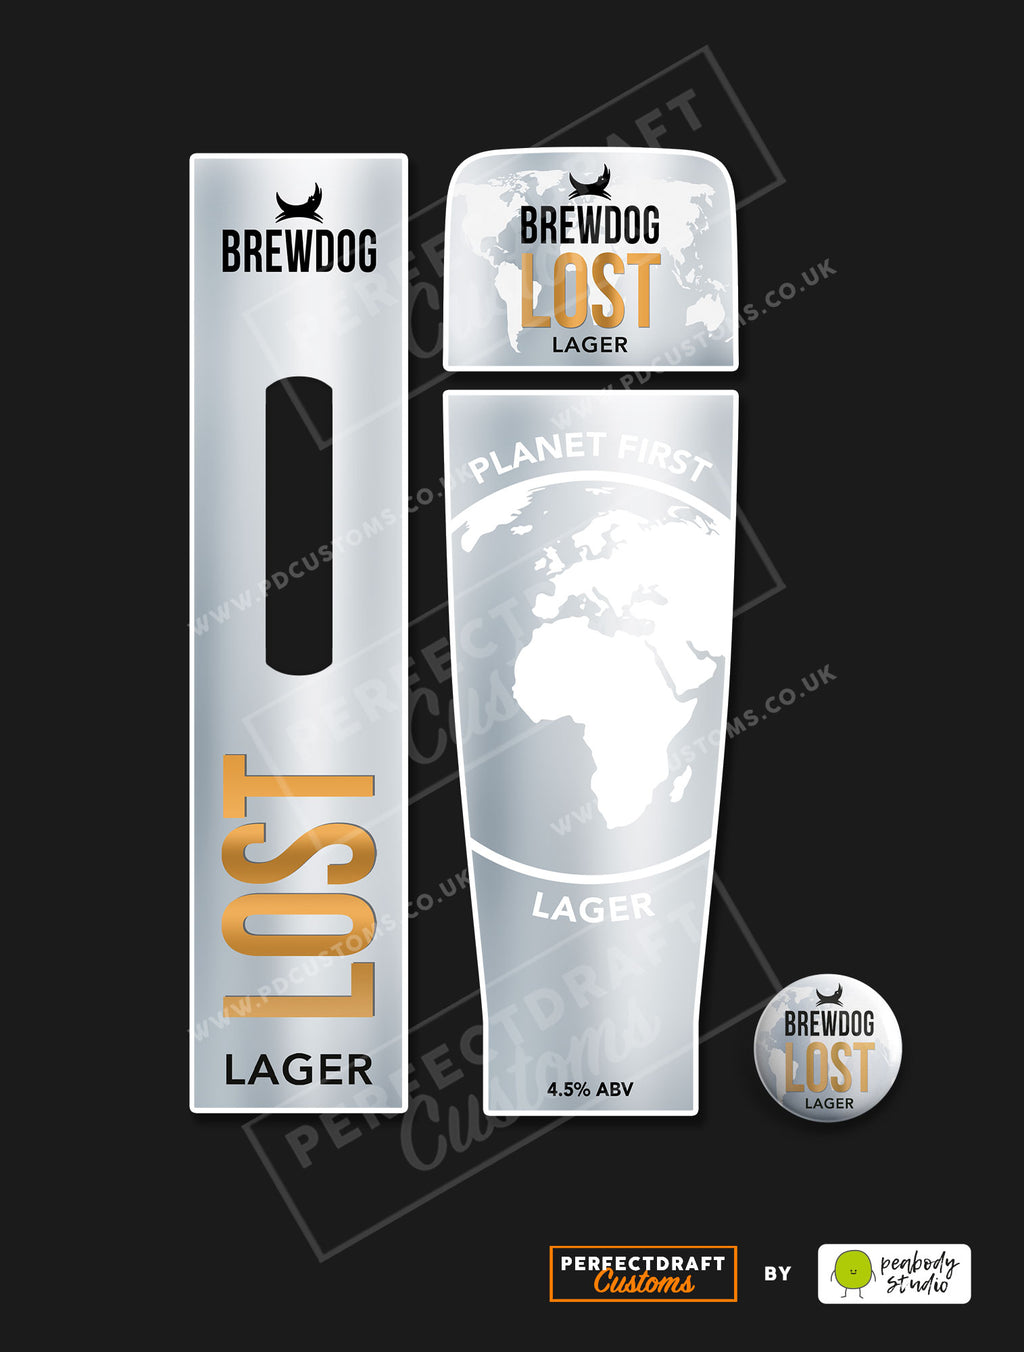 Lost Lager (Brewdog) Perfect Draft Skin